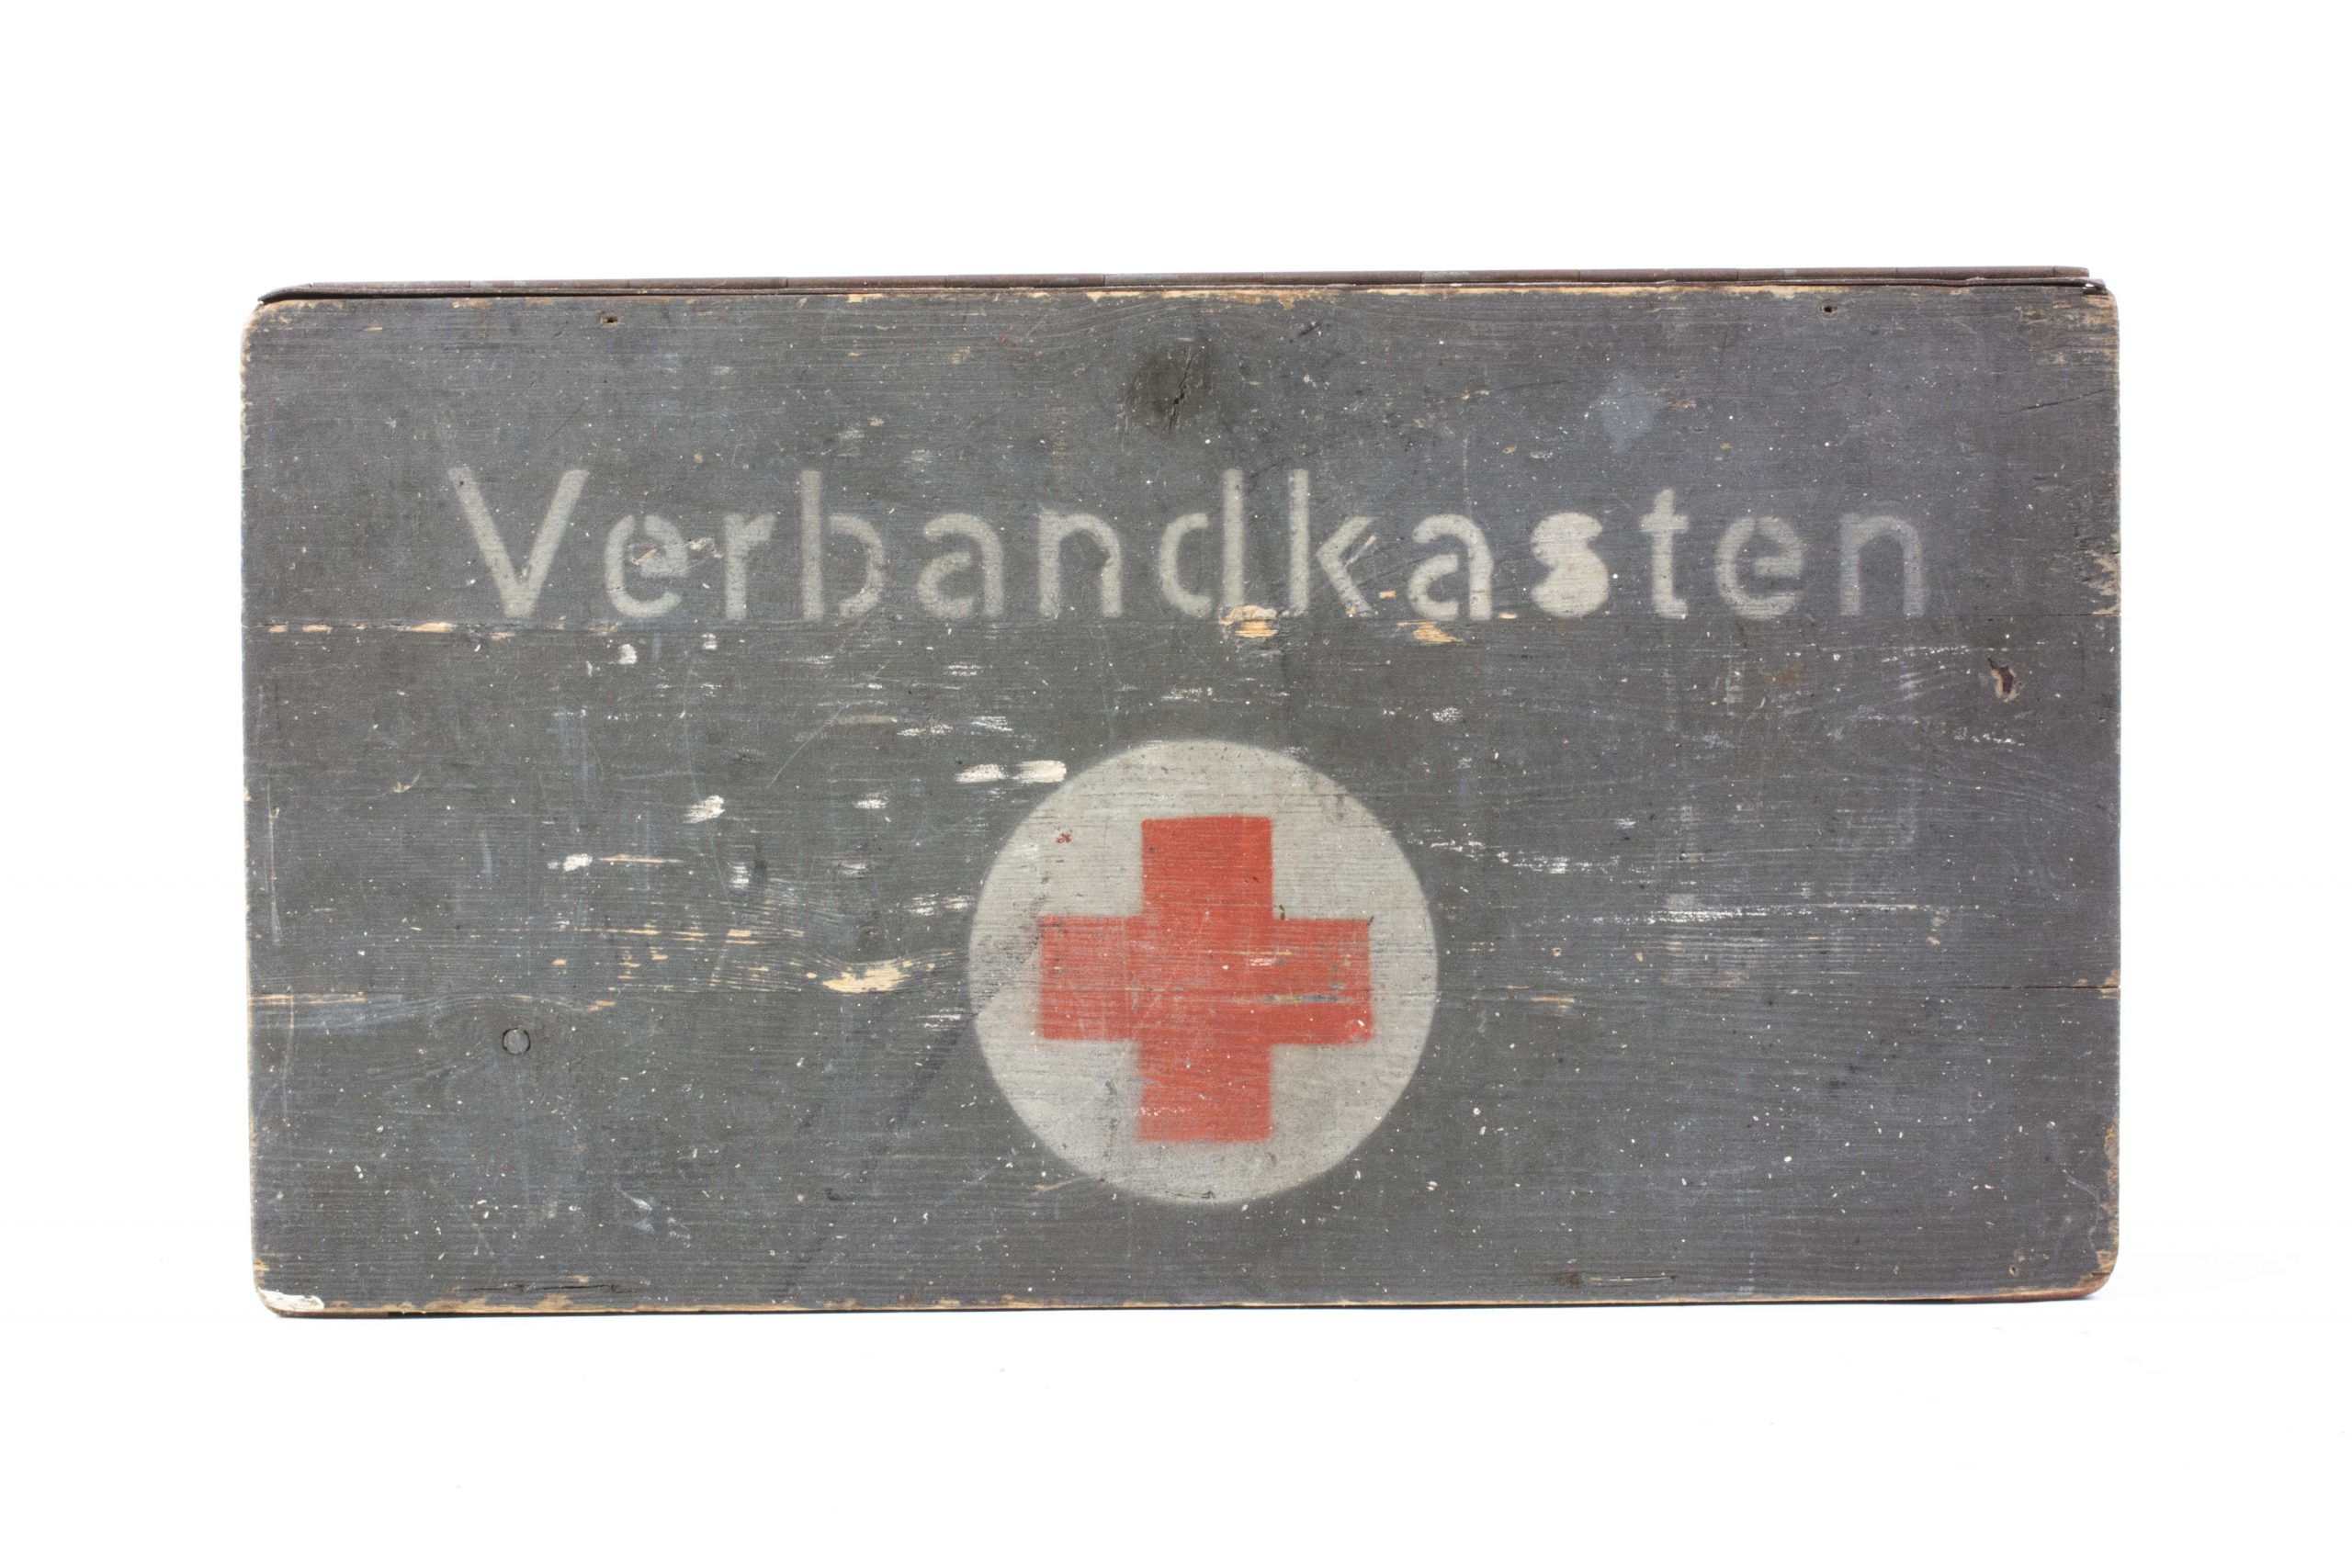 Third pattern vehicle first aid kit or Verbandkasten